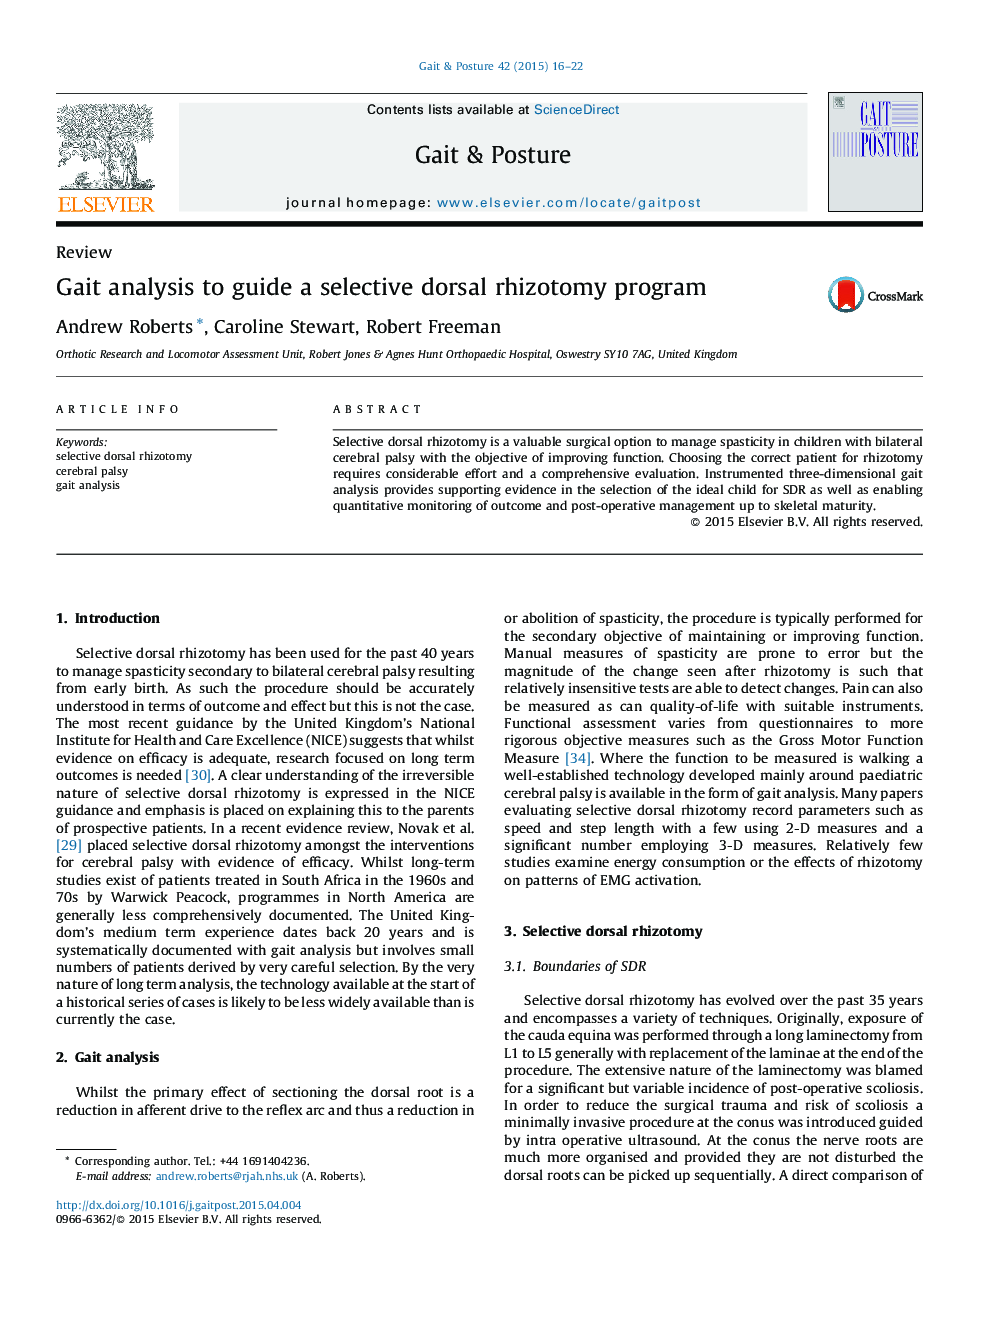 Gait analysis to guide a selective dorsal rhizotomy program